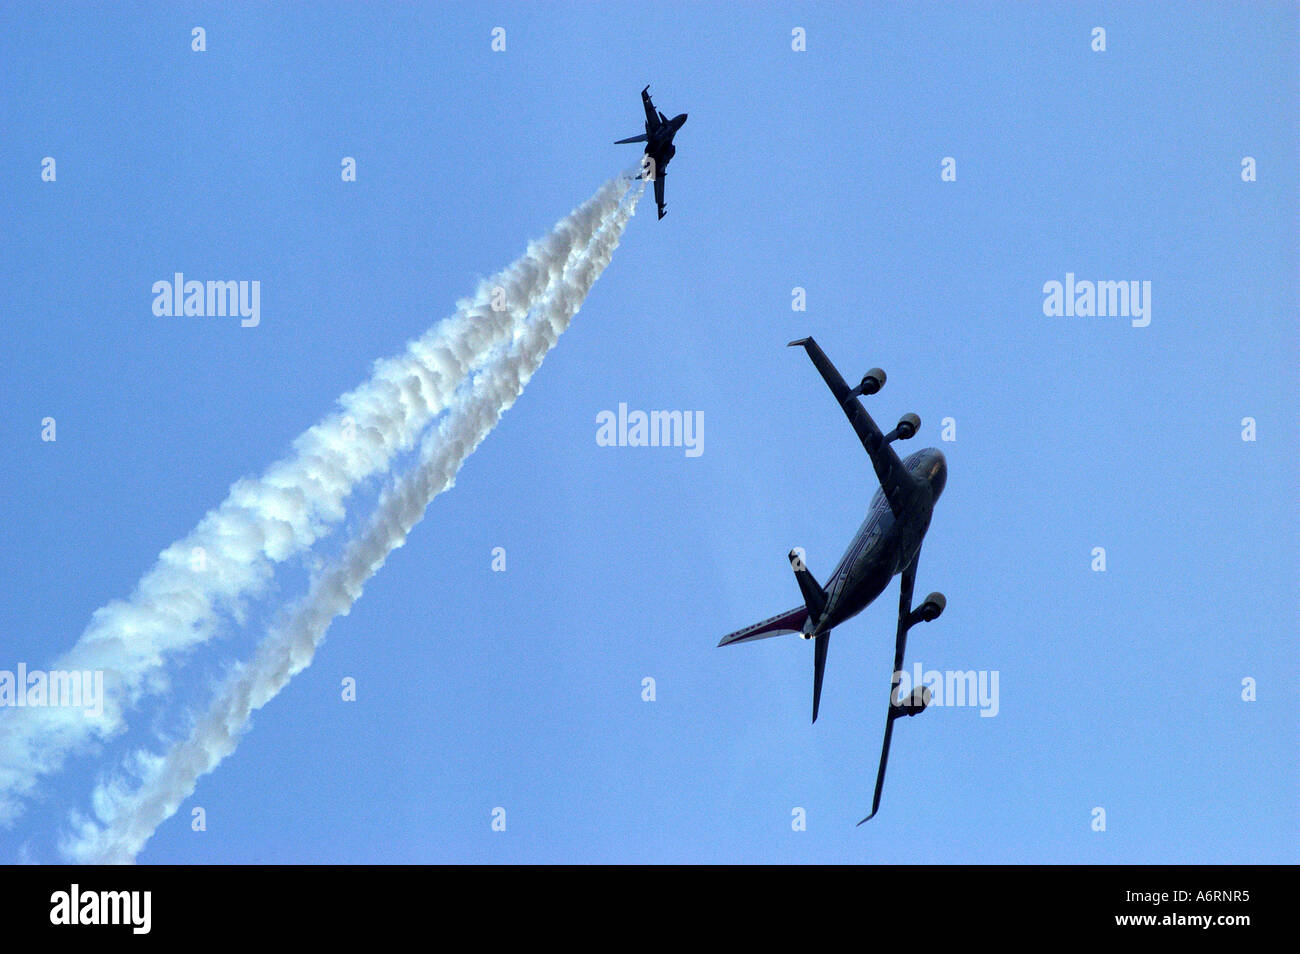 Cna77303 avion survol d'avions de chasse avec pendant air show Banque D'Images